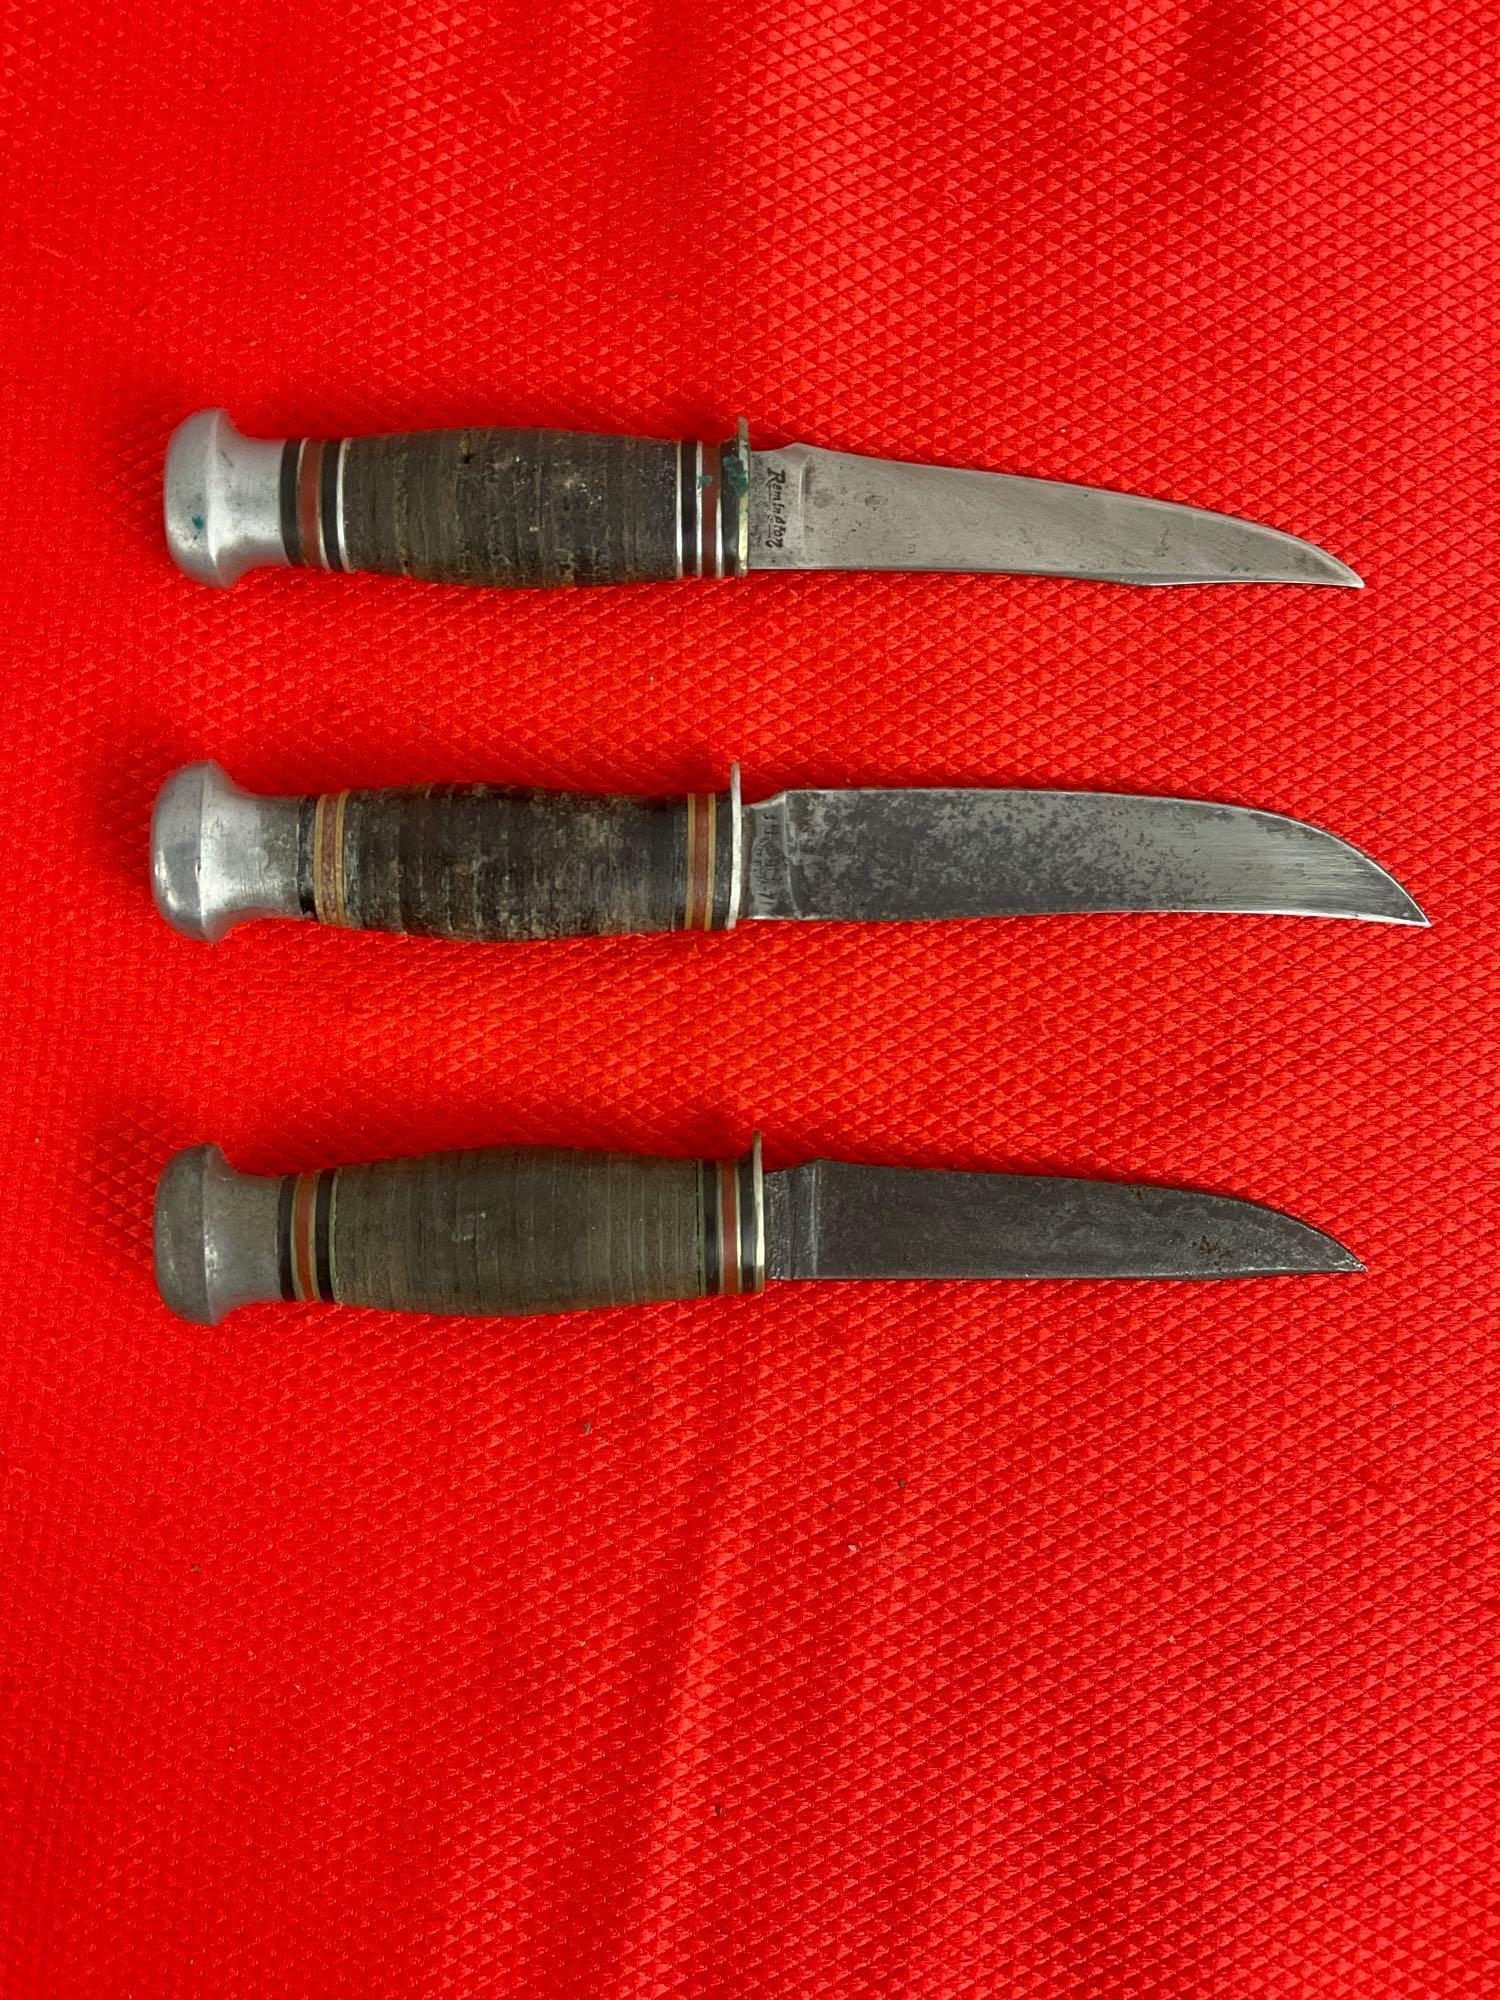 3 pcs Vintage Remington Steel Fixed Blade Boy Scout Knives Models R7, R51 & R71. 1 Leather Sheath.